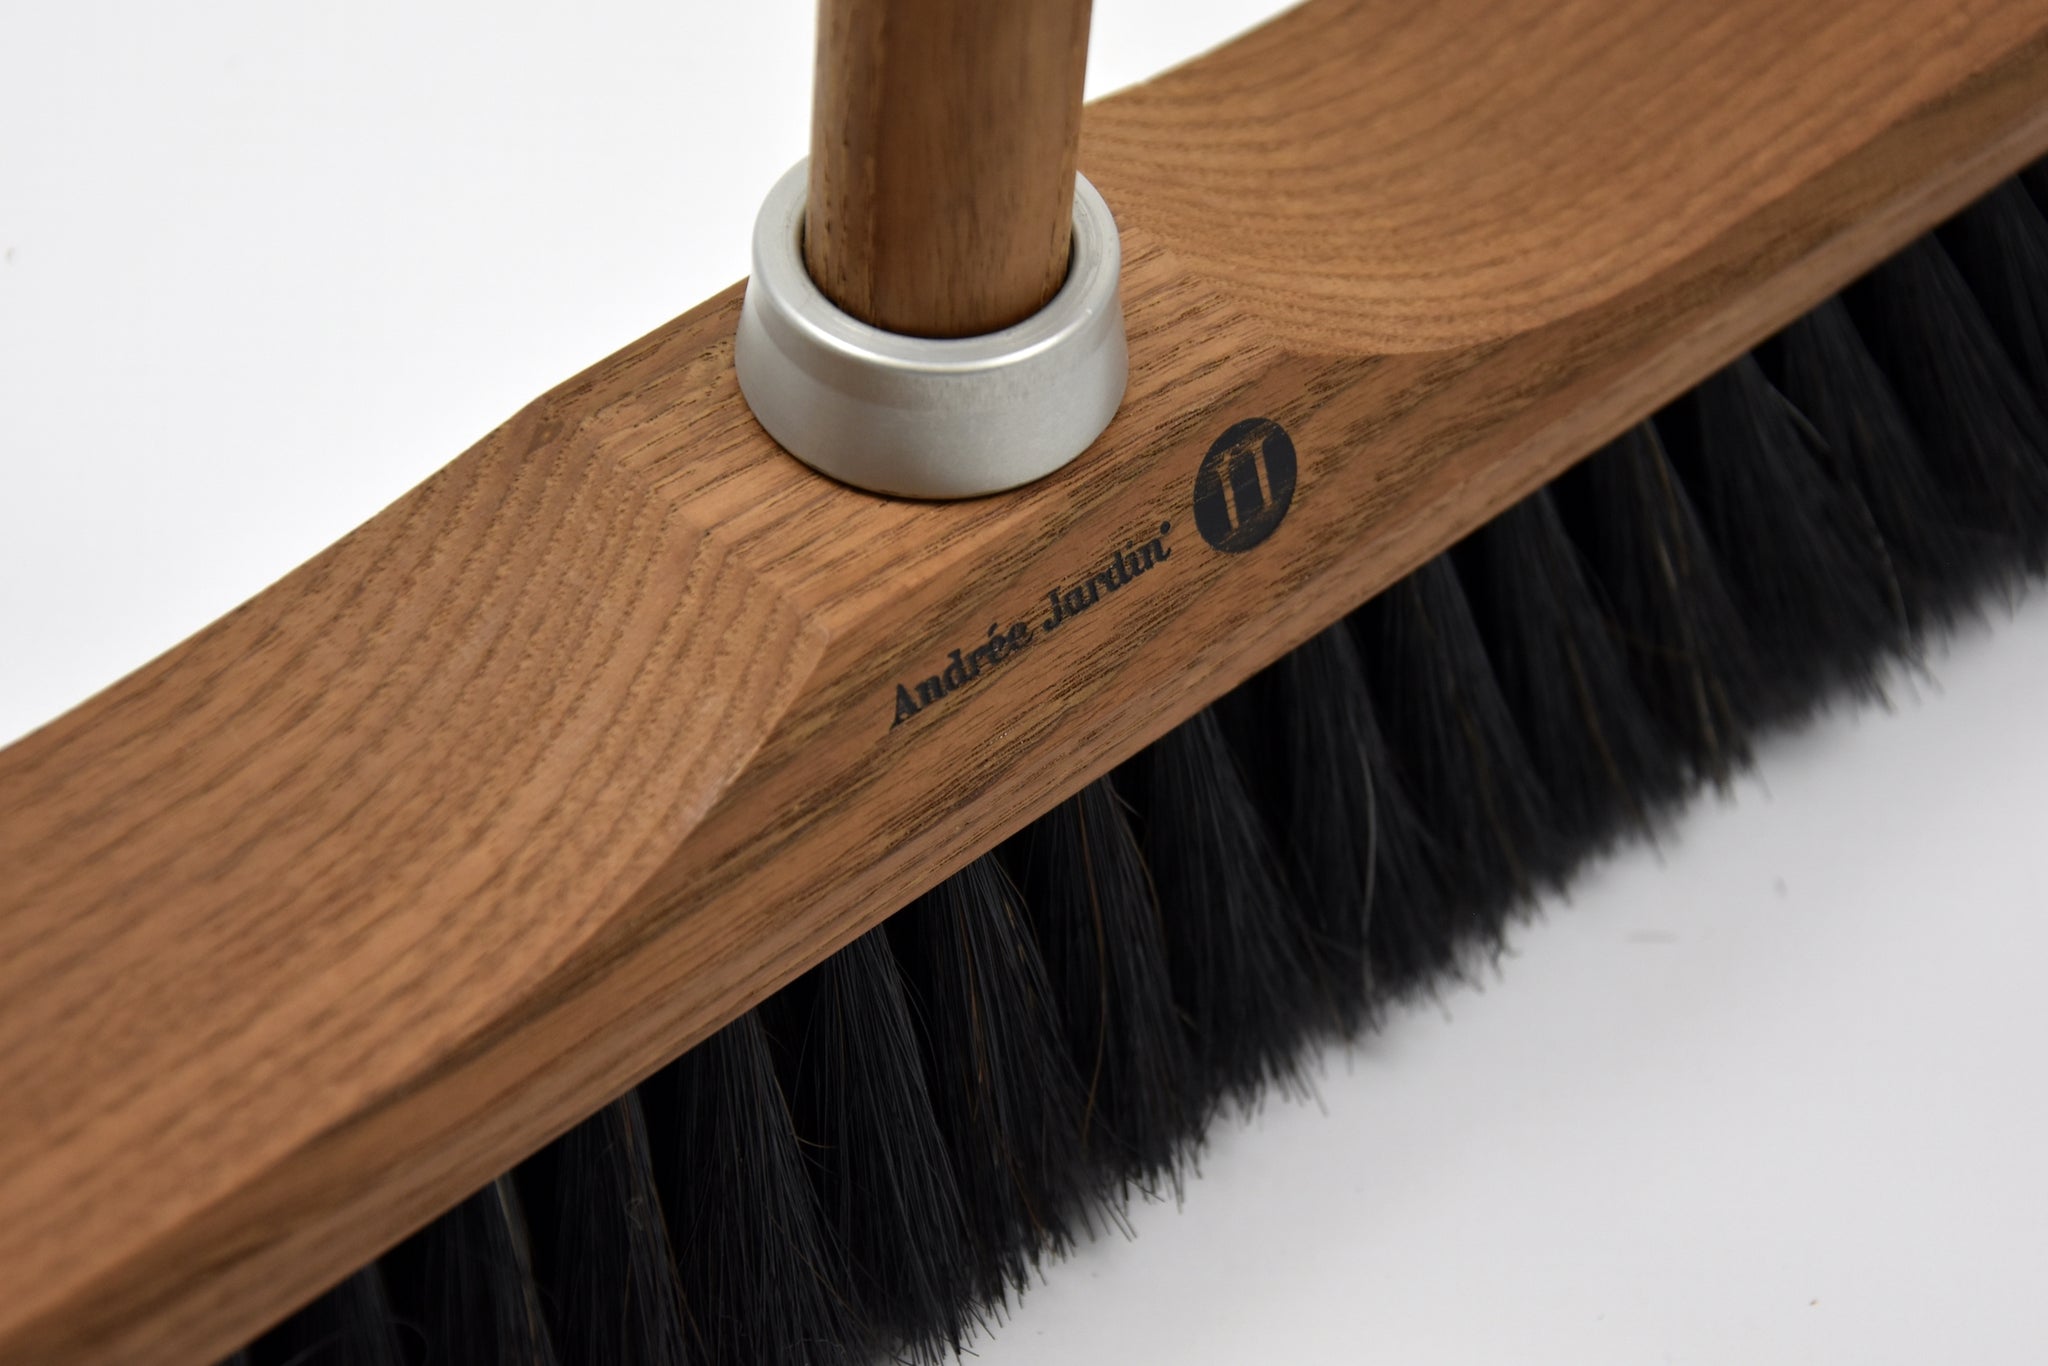 Dark wood broom with black bristles. Logo reads Andree Jardin.